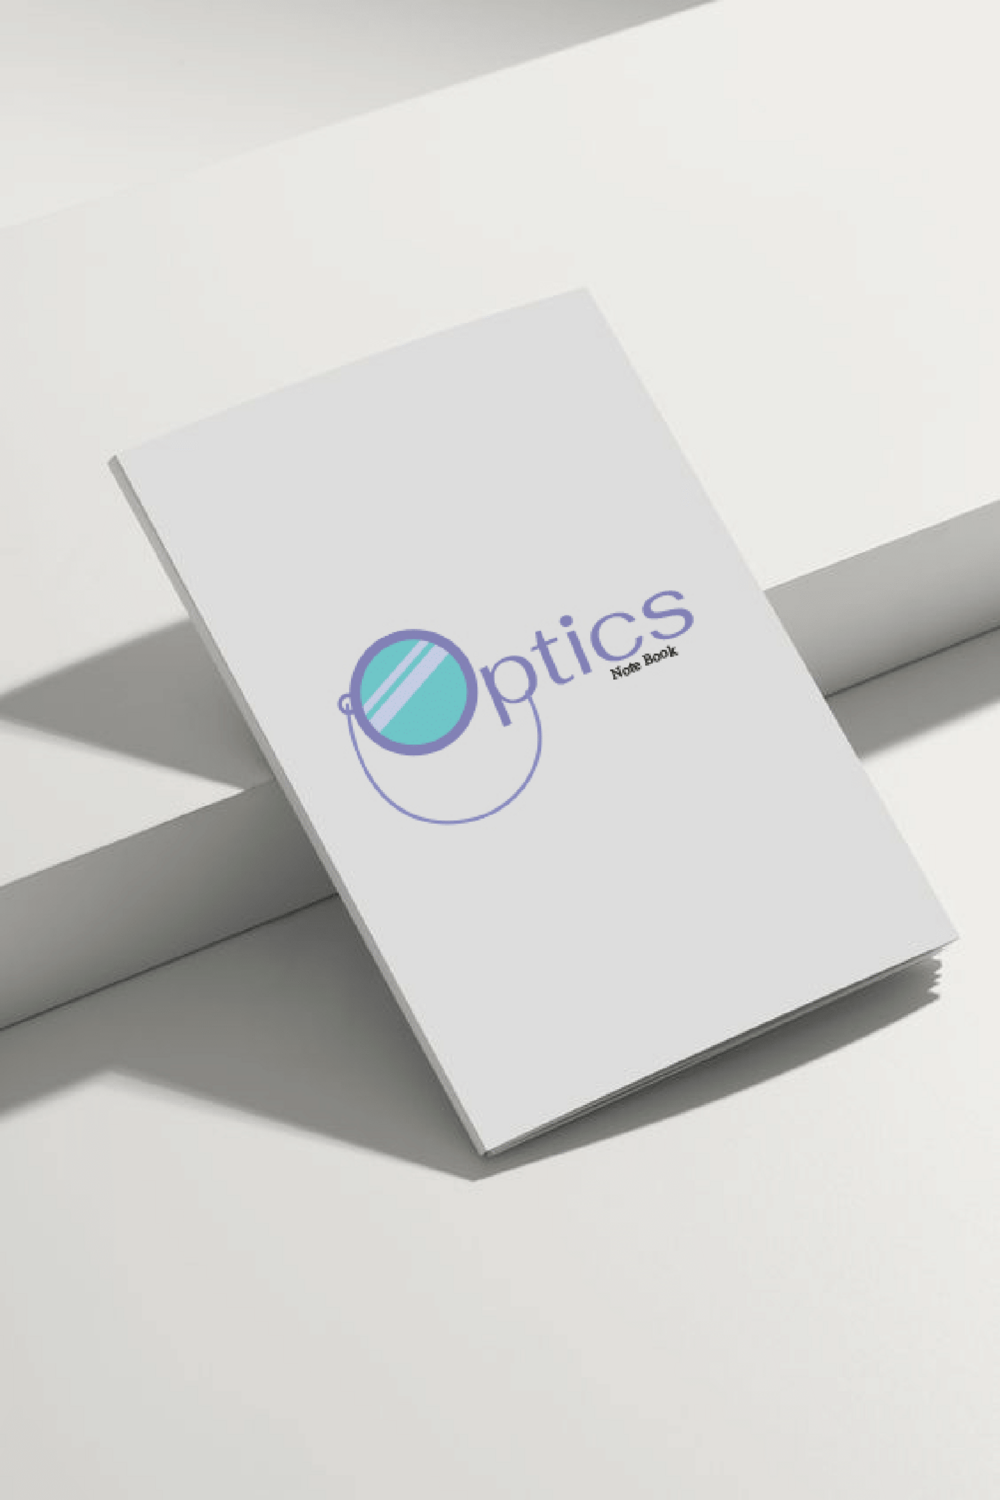 Optics vector logo pinterest preview image.